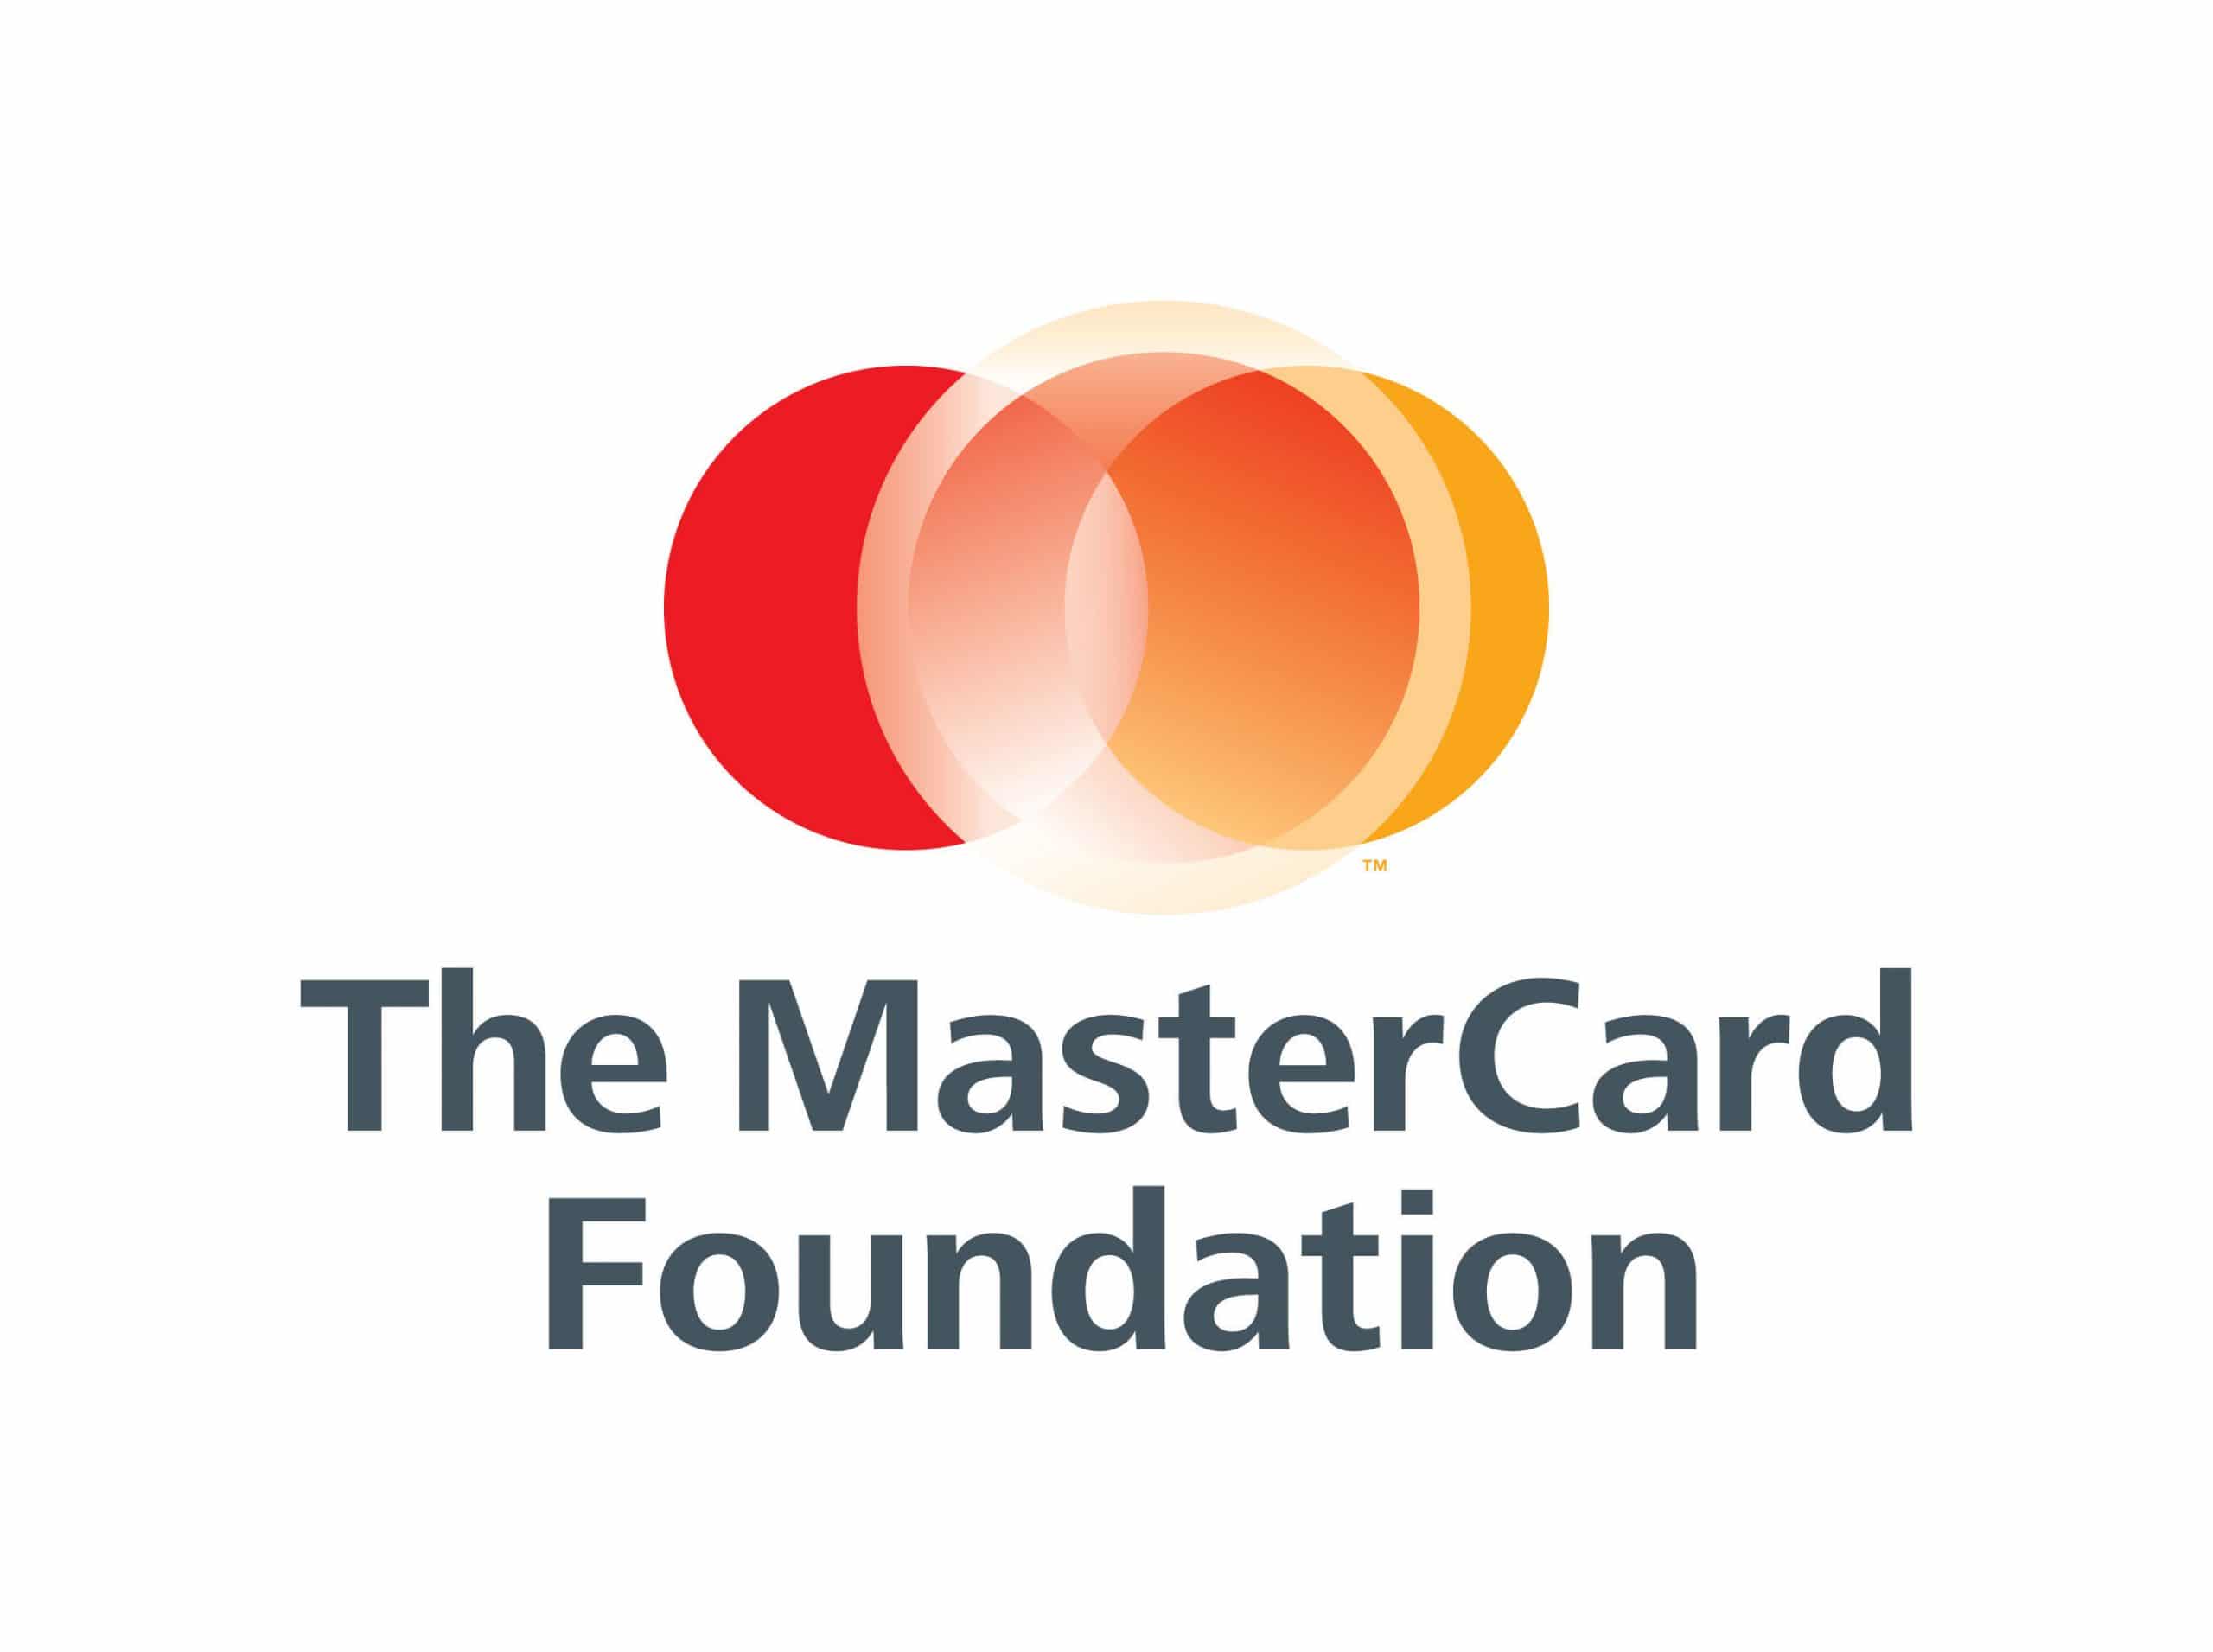 Mastercard Foundation Scholarship